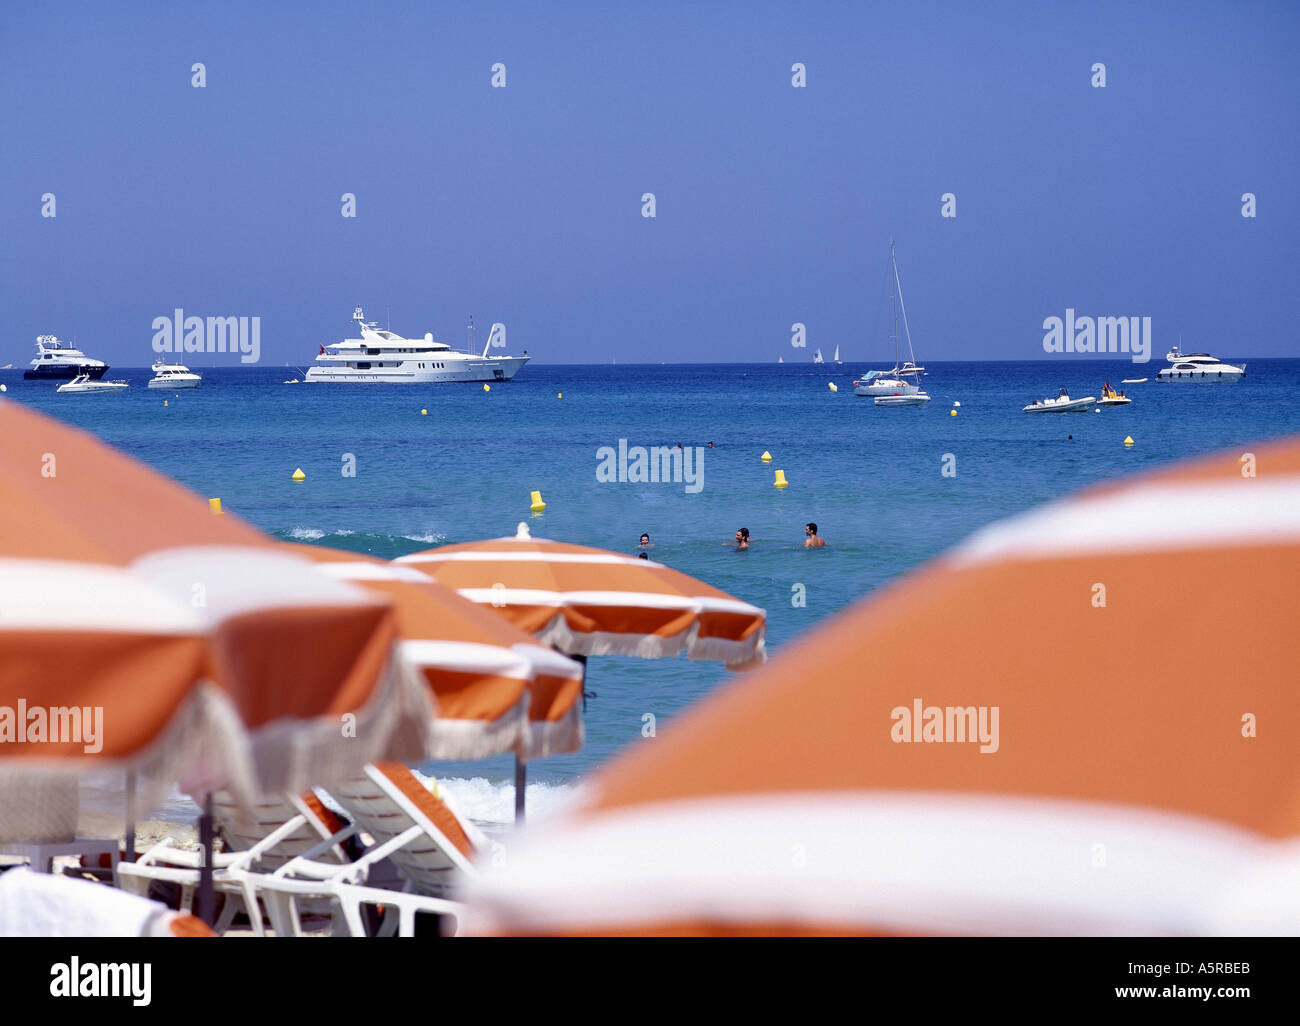 St Tropez Beach, vista diurna Foto Stock